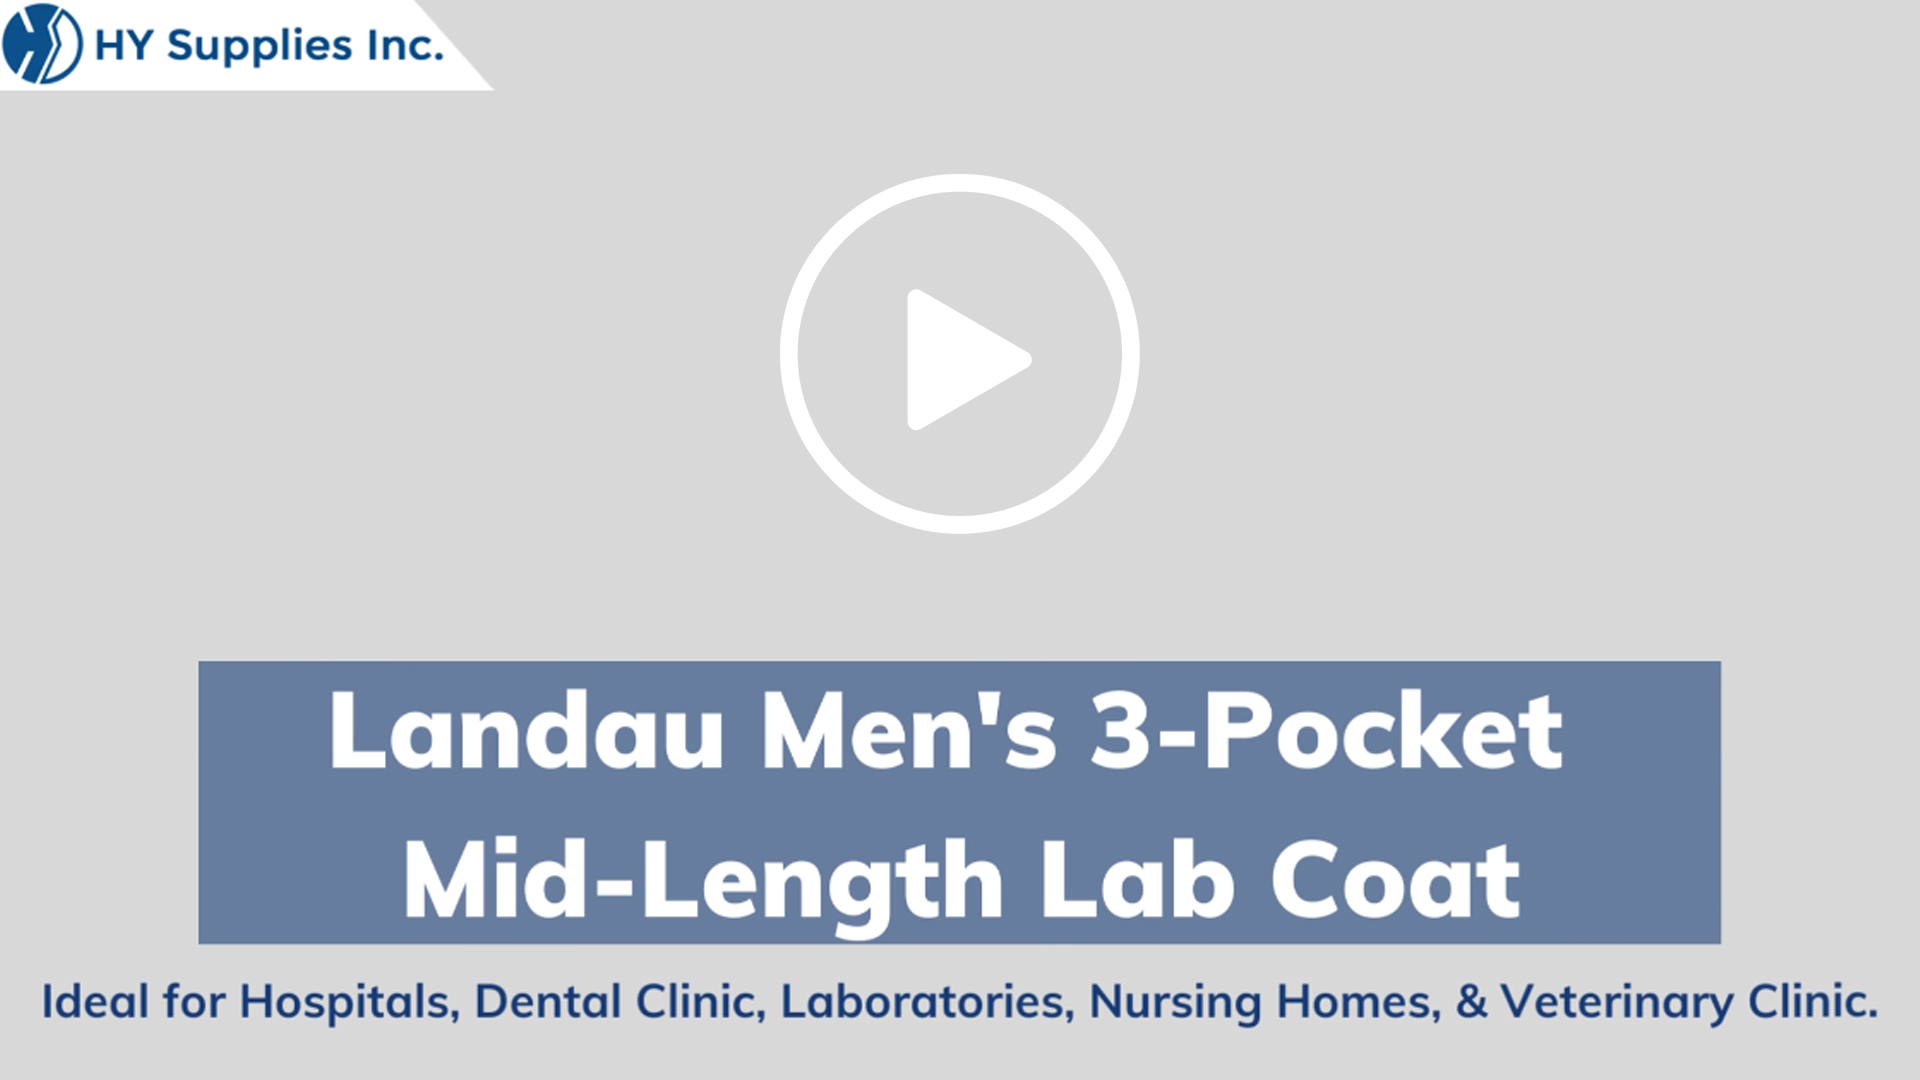 LANDAU MEN'S 3-POCKET MID-LENGTH LAB COAT